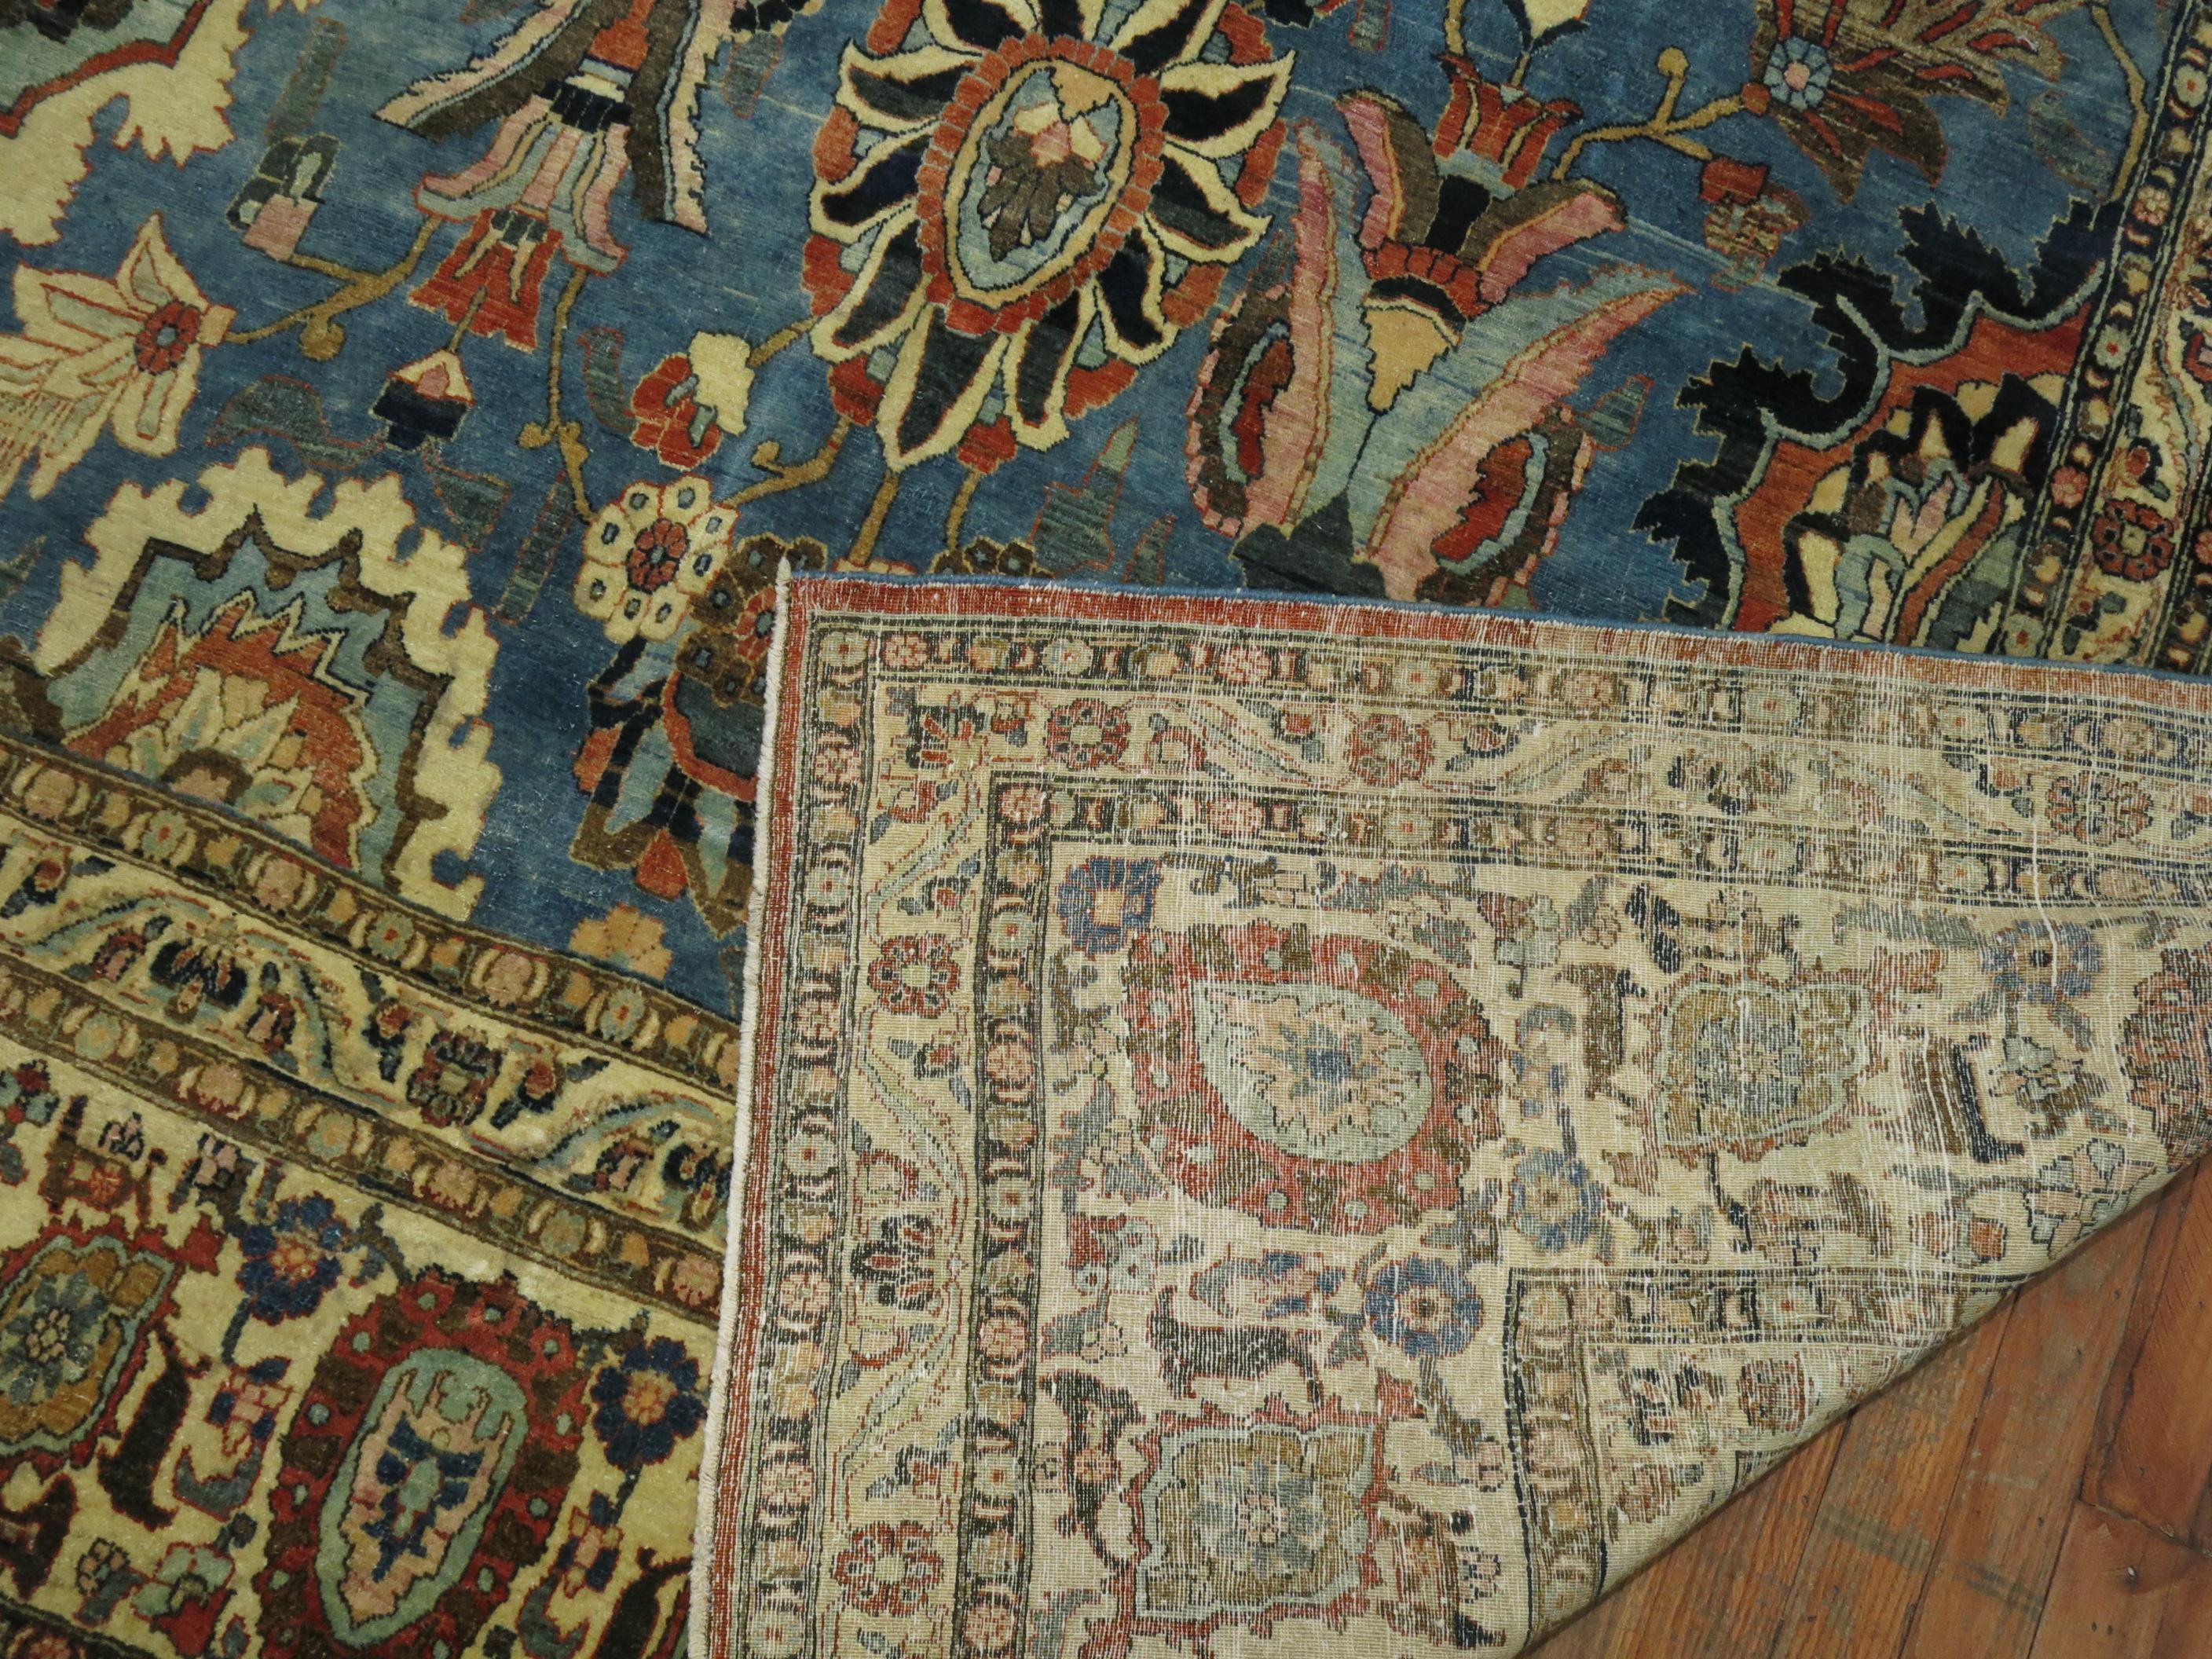  Zabihi Collection Antique Persian Tabriz Carpet For Sale 4